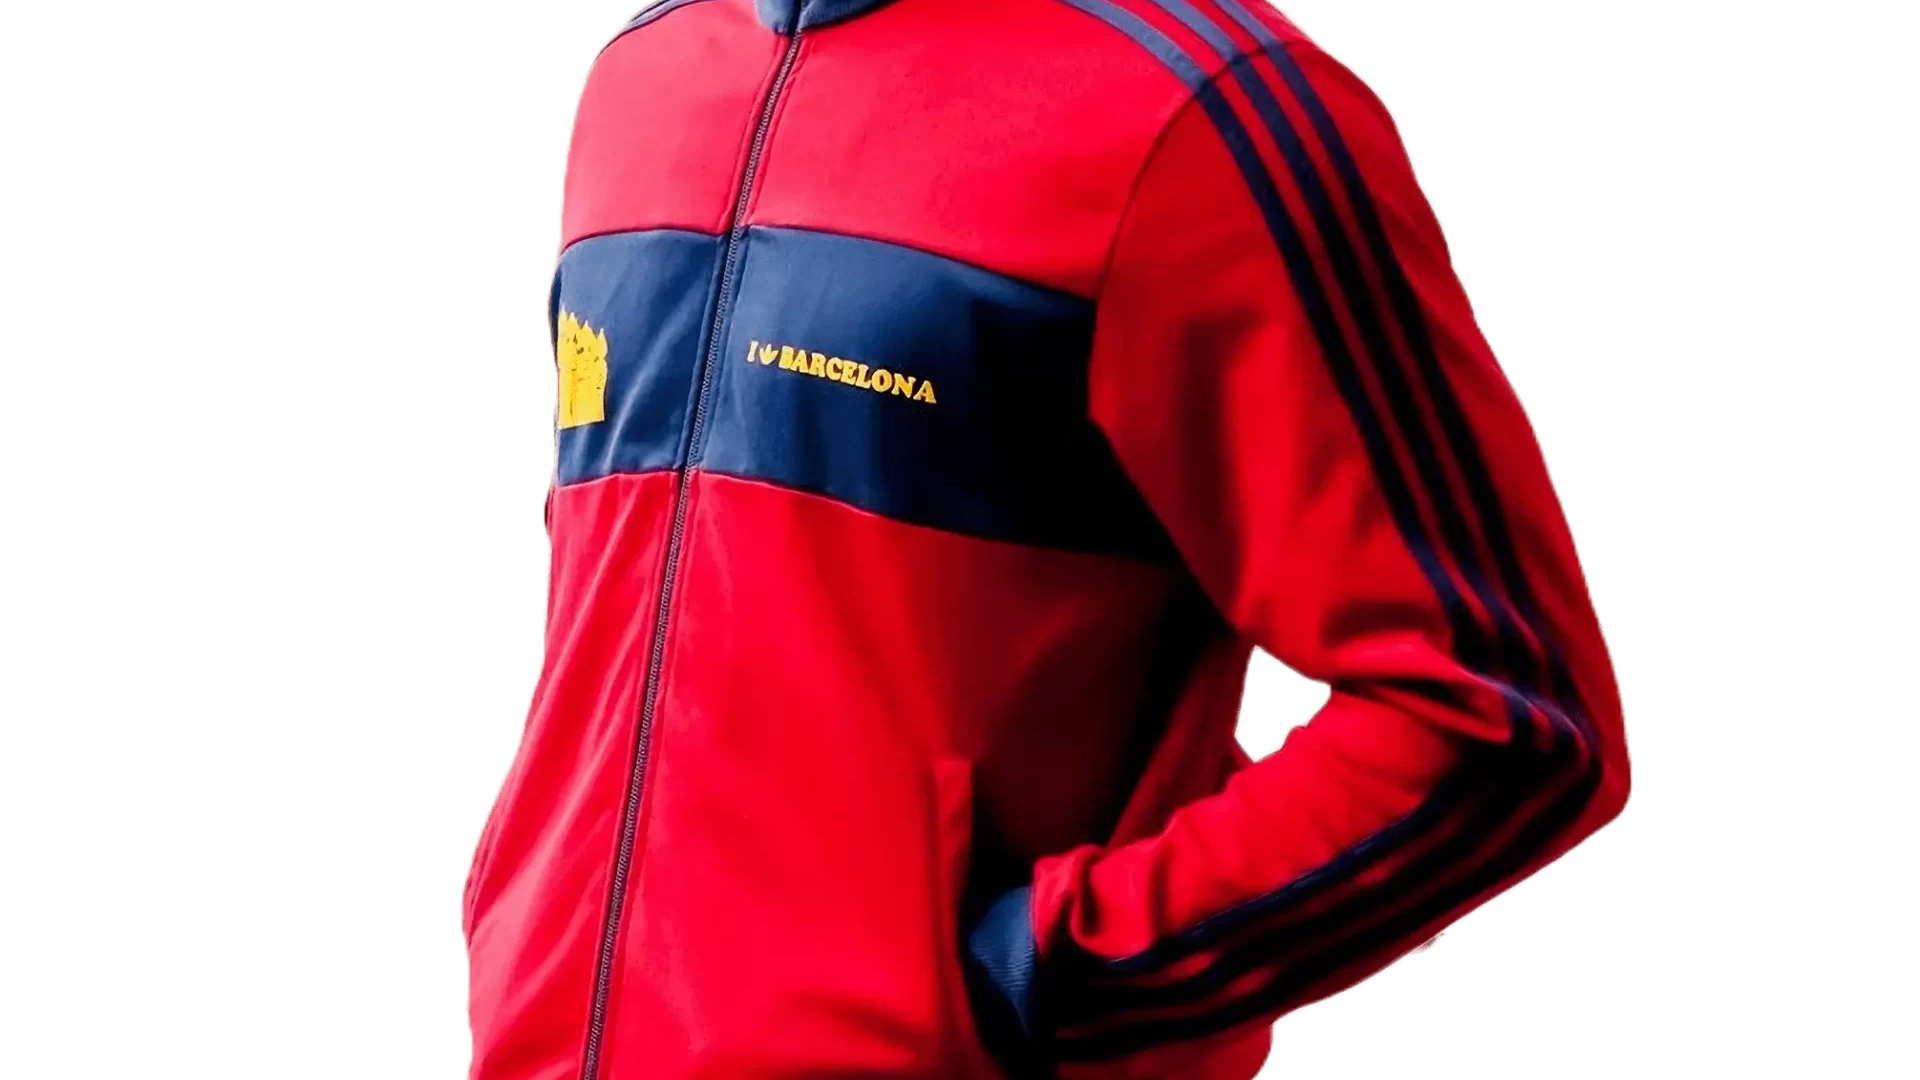 Men's 2006 Barcelona TT-Two by Adidas Originals: Endorsed (EnLawded.com file #lmchk58211ip2y123308kg9st)